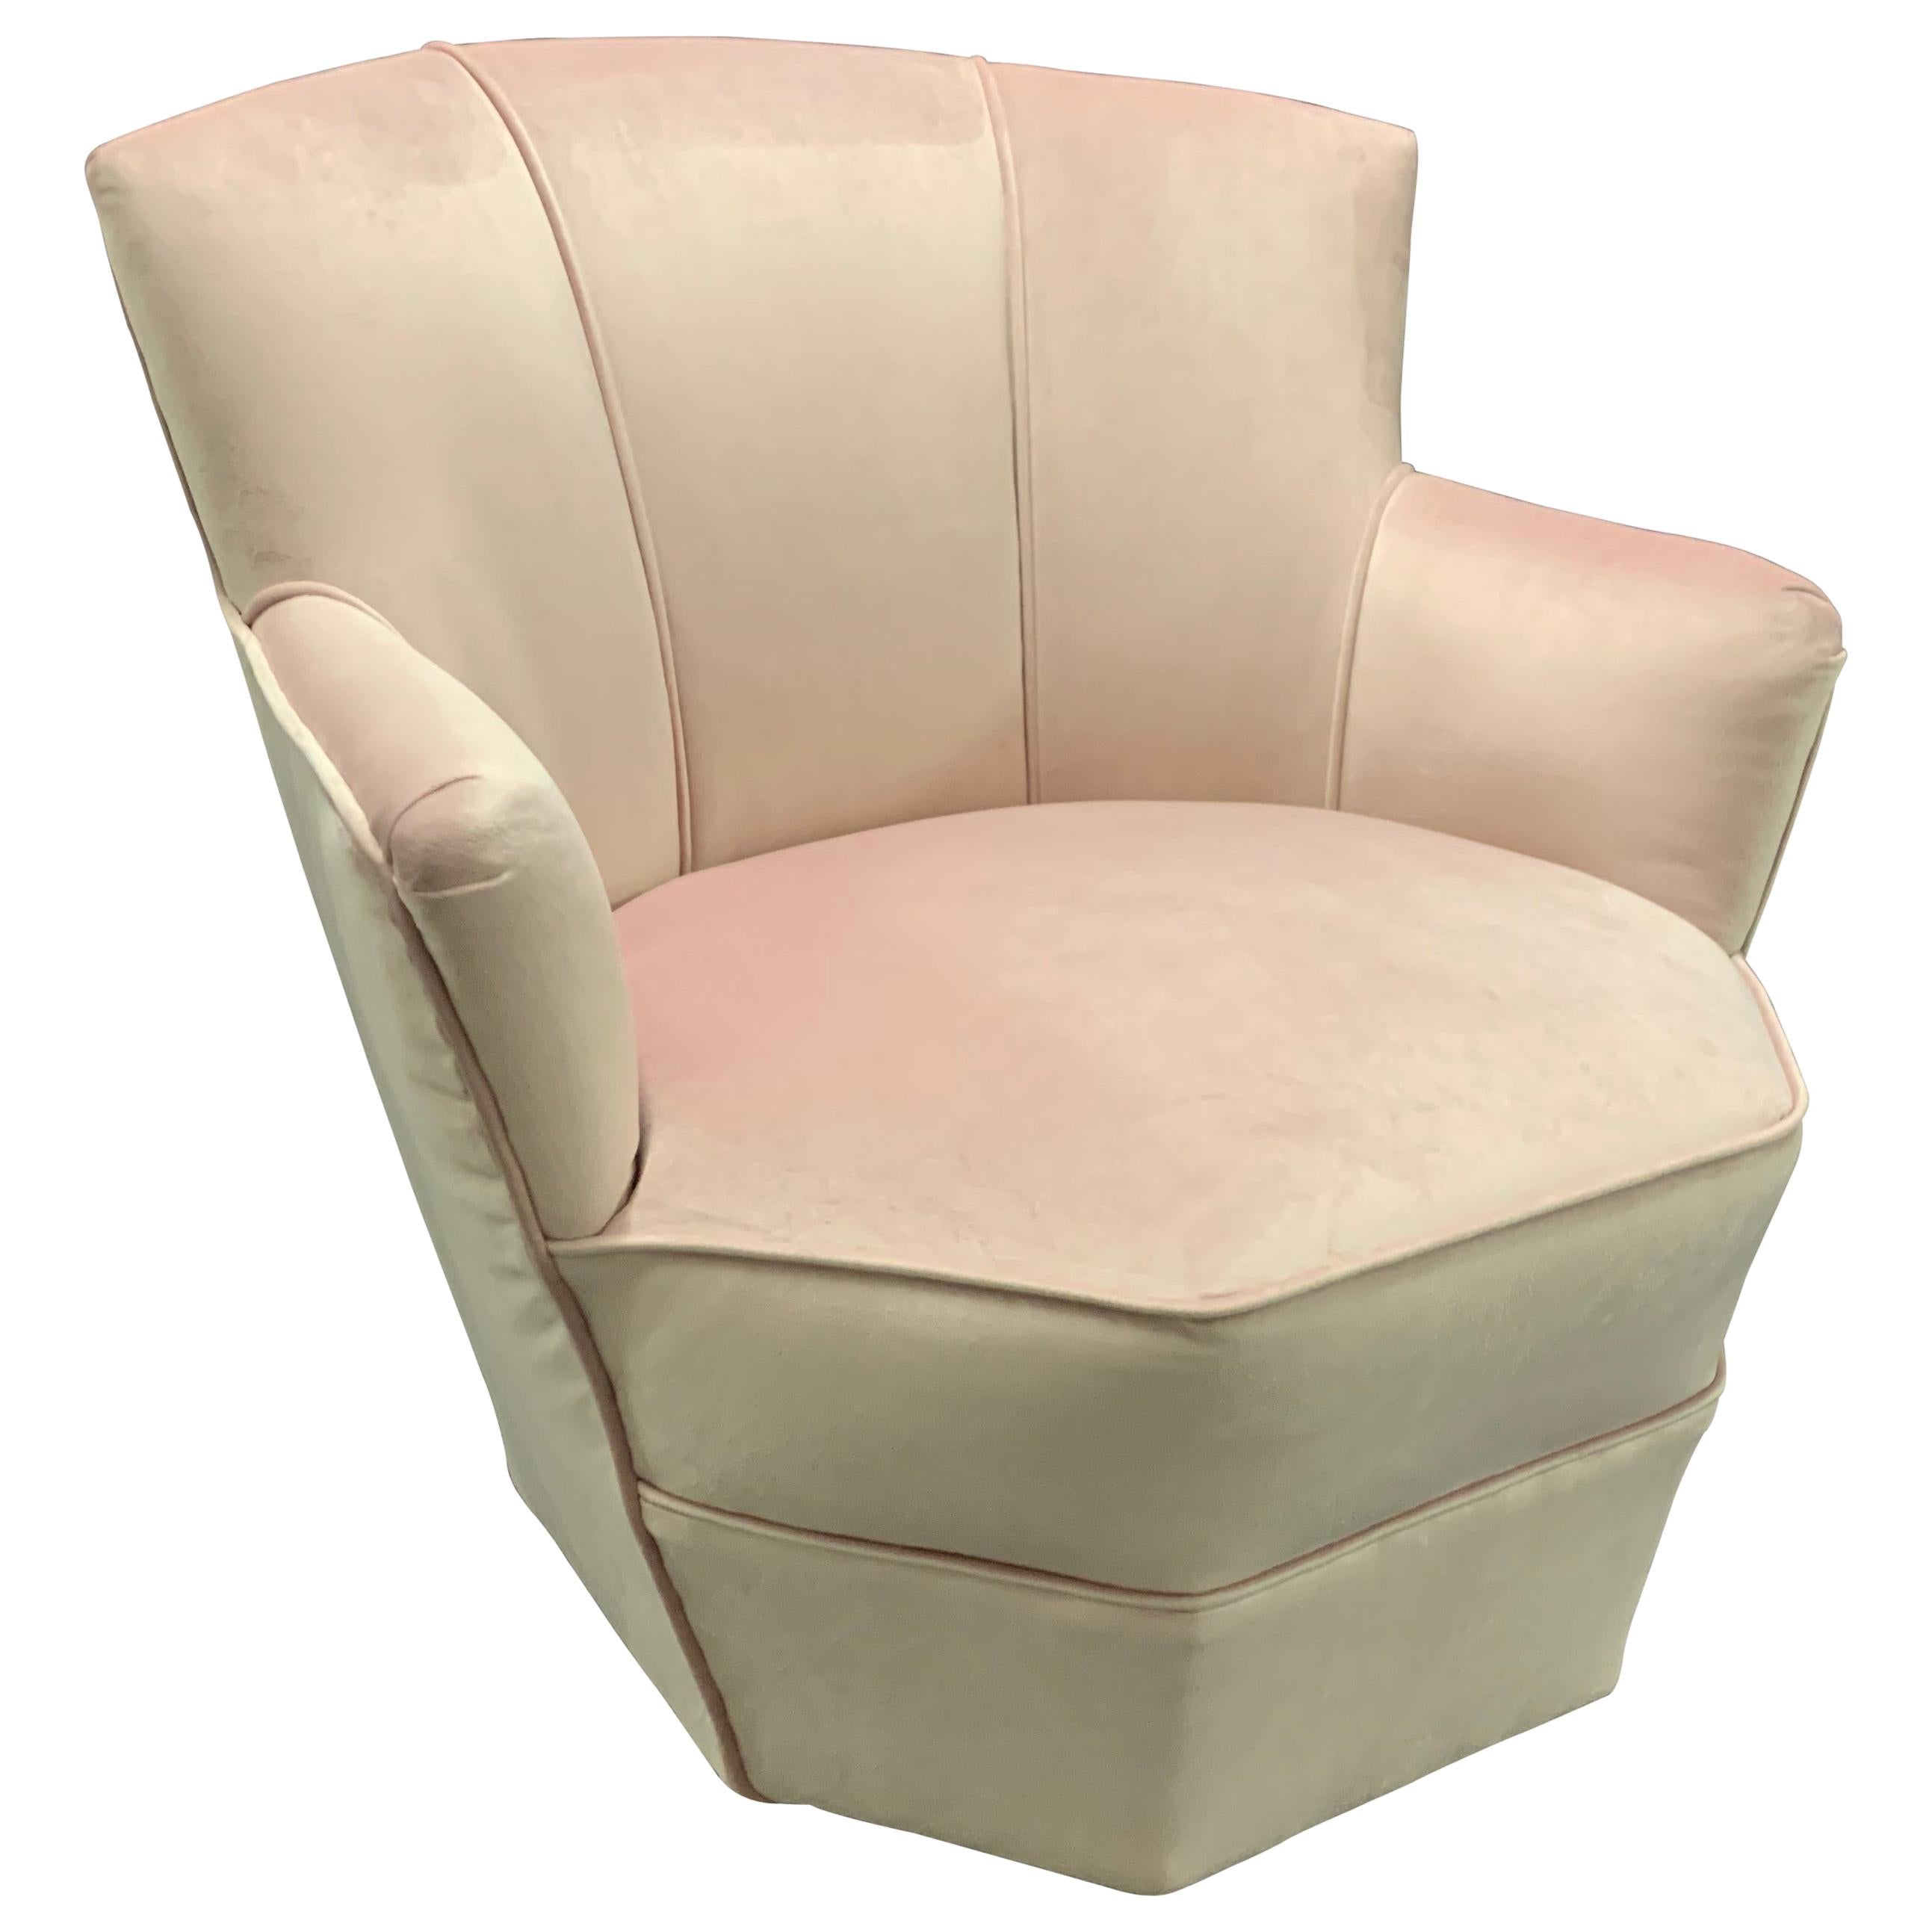 Wonderful French Boudoir Lounge Chair